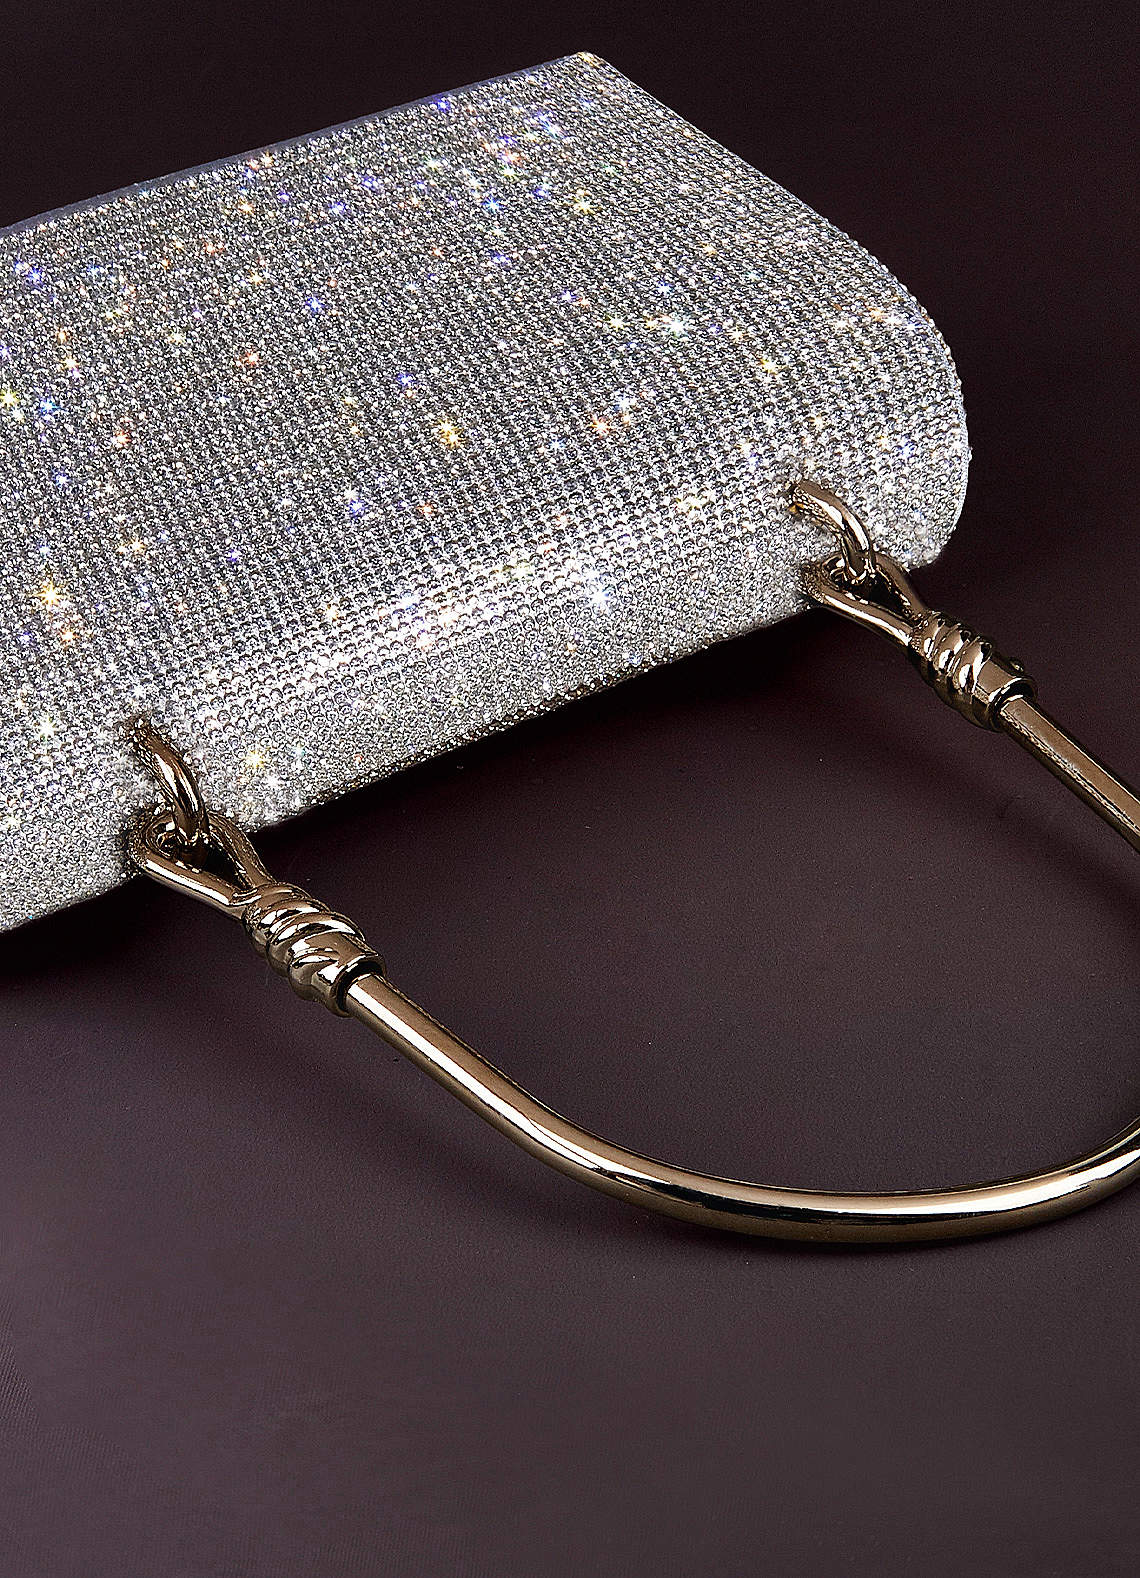 Crystal Diamond Top Handle Embellished Evening Clutch Bag - silver